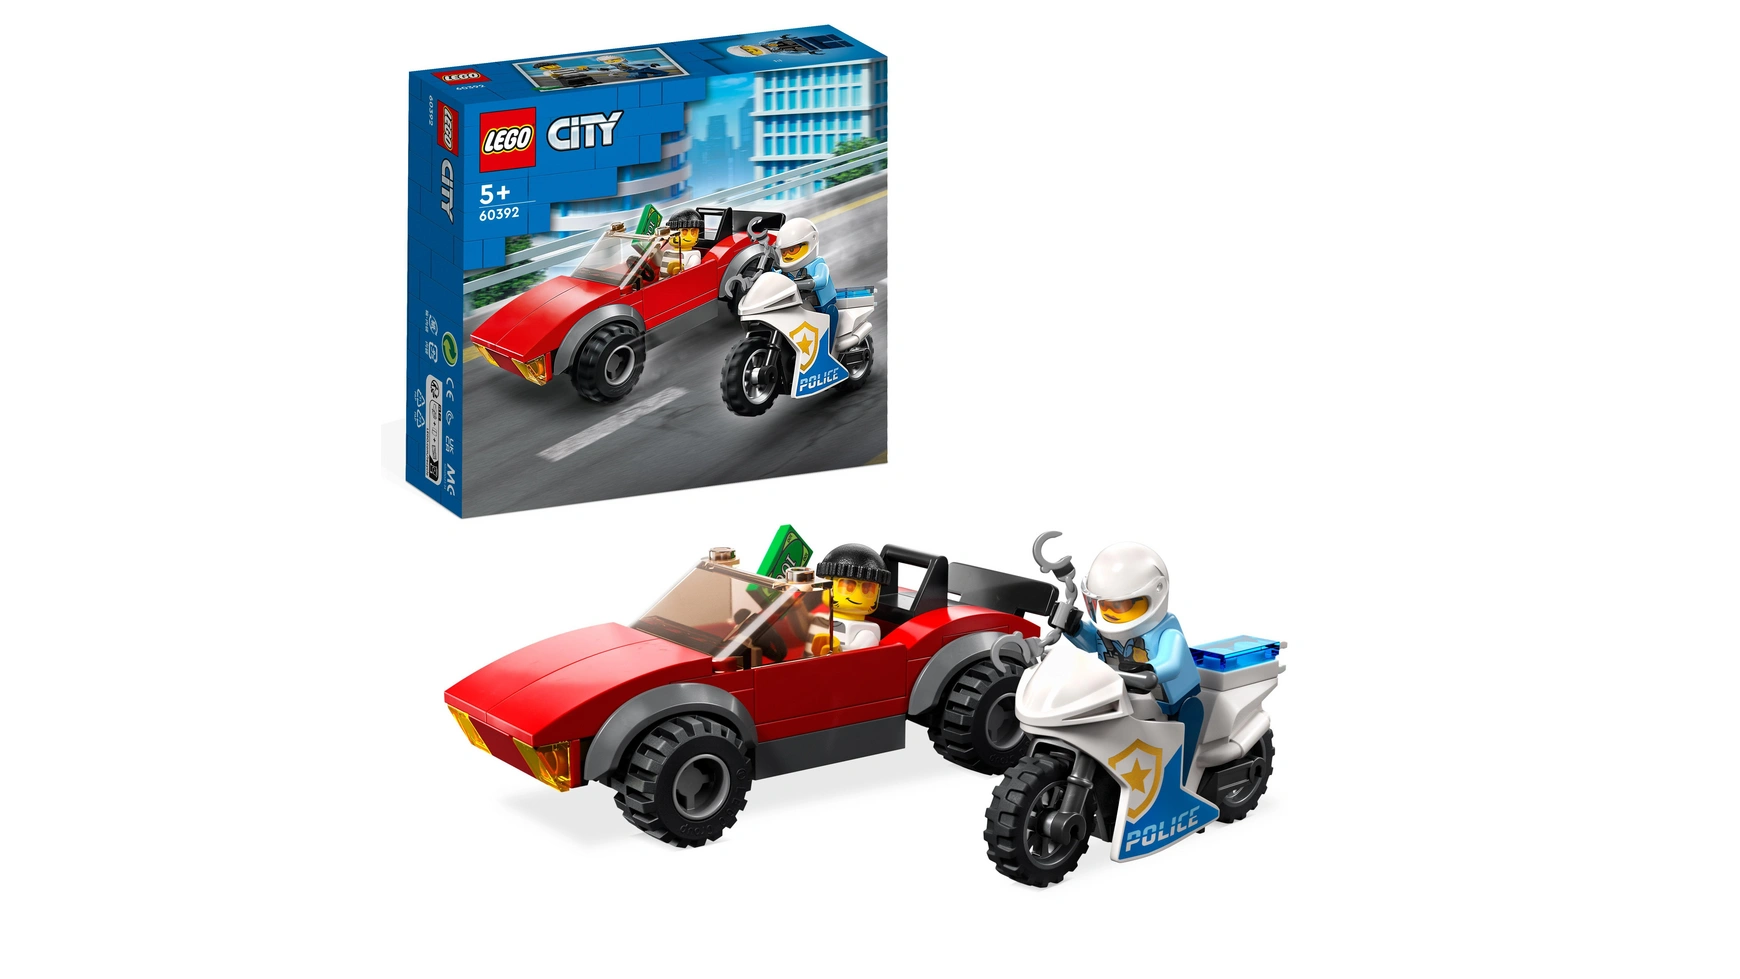 Lego City Полицейская погоня на мотоцикле цена и фото